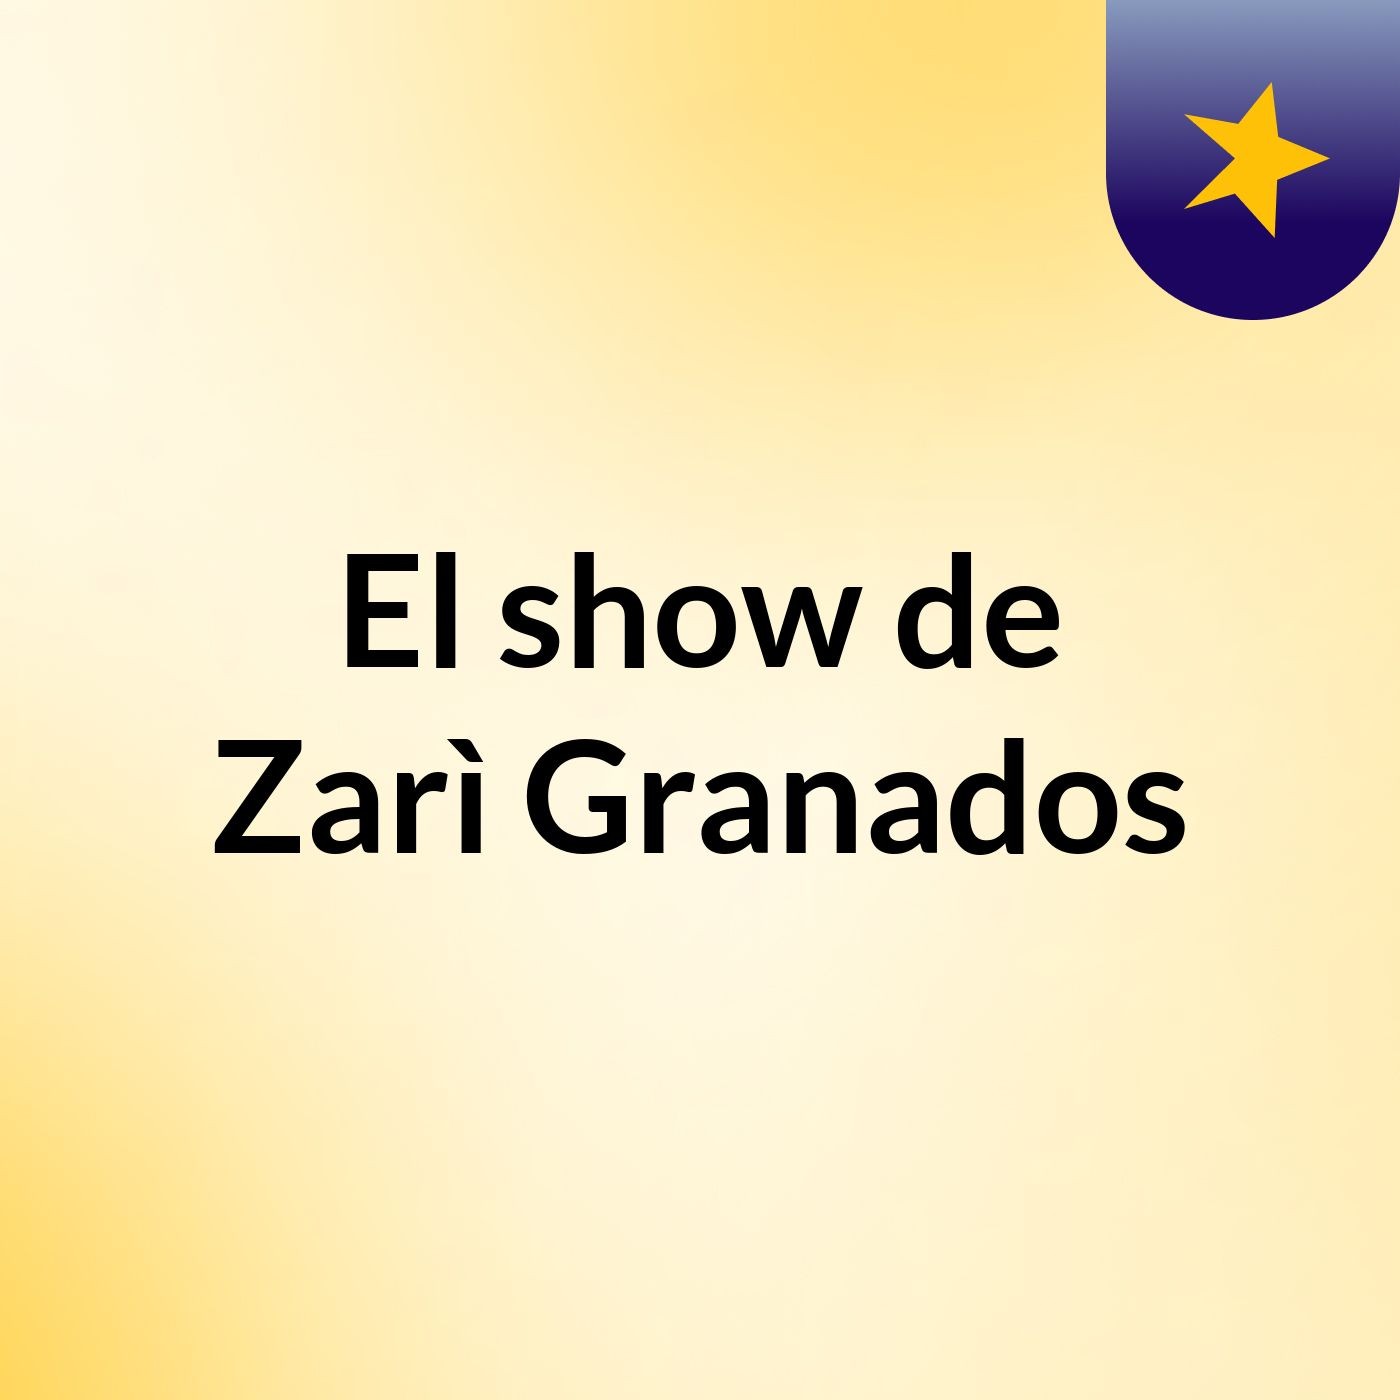 El show de Zarì Granados